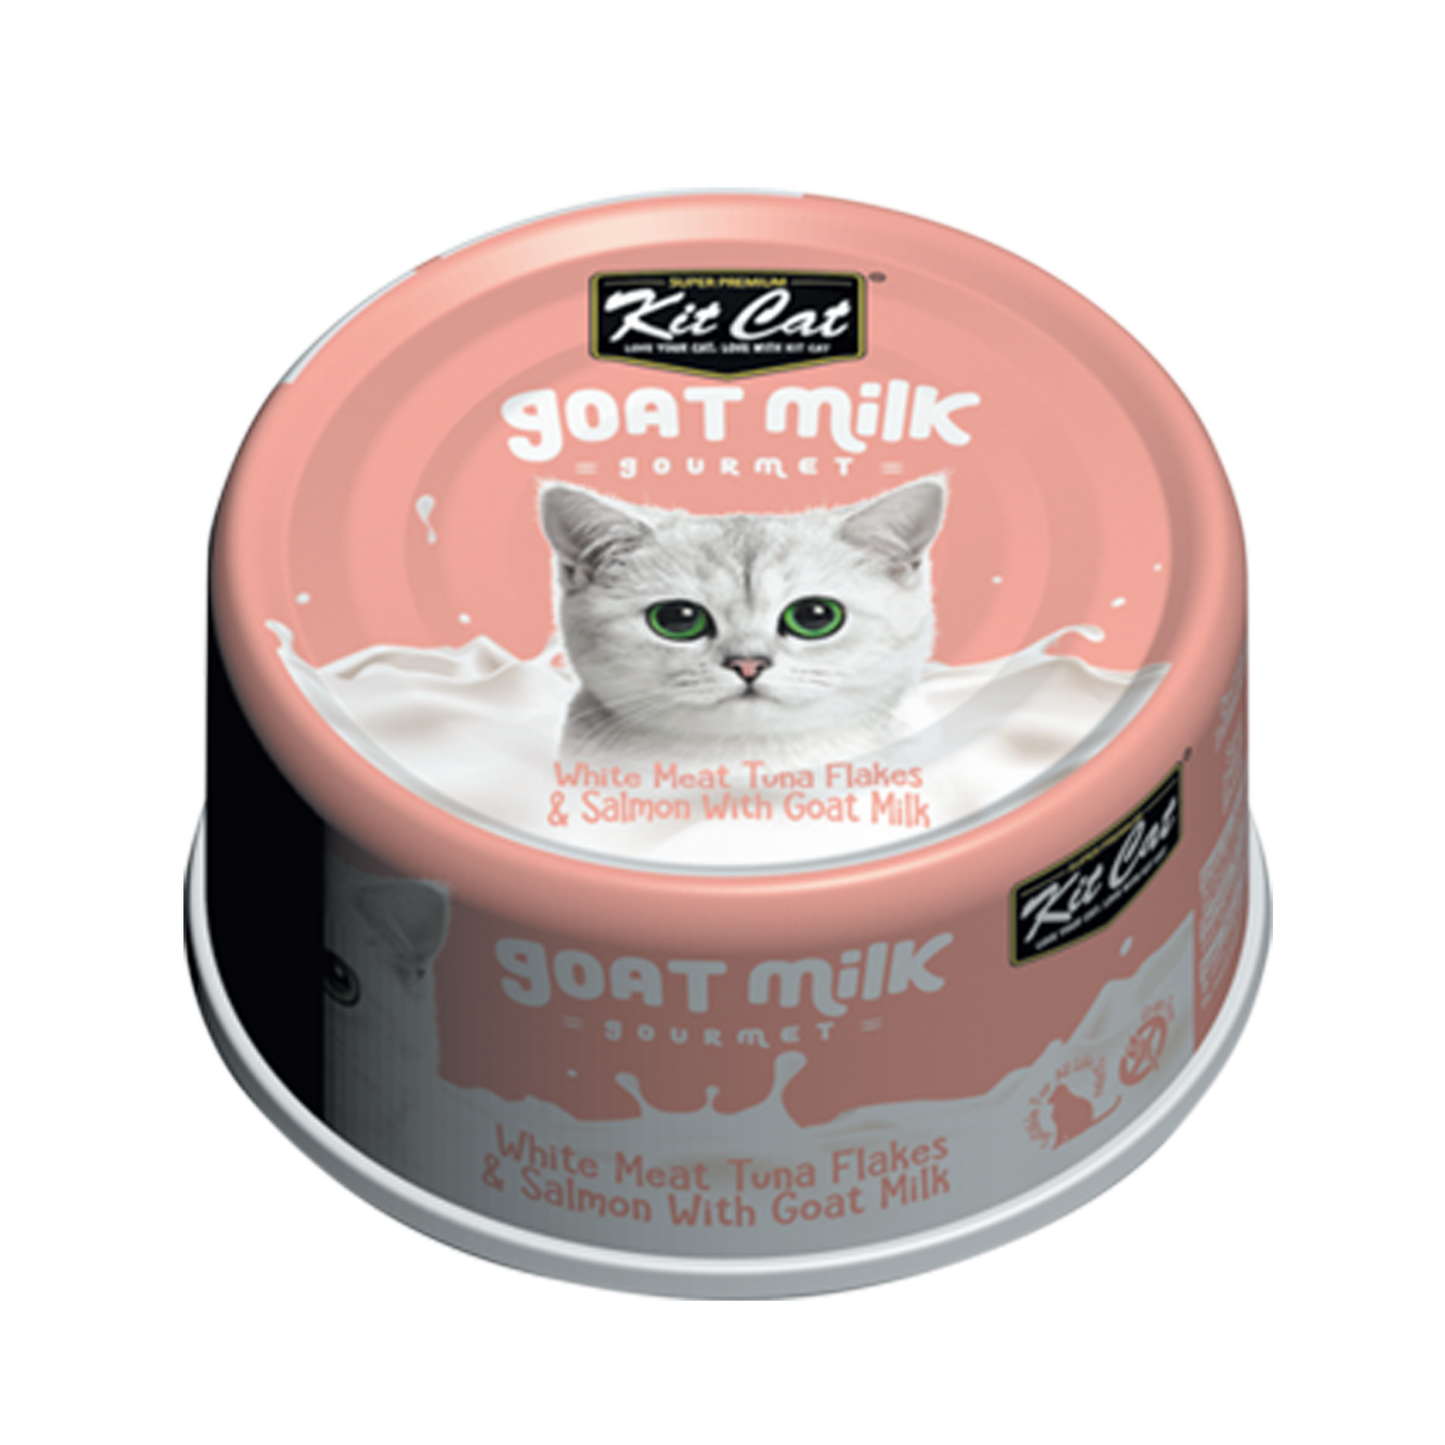 Kit Cat White Meat Tuna Flakes & Salmon With Goat Milk